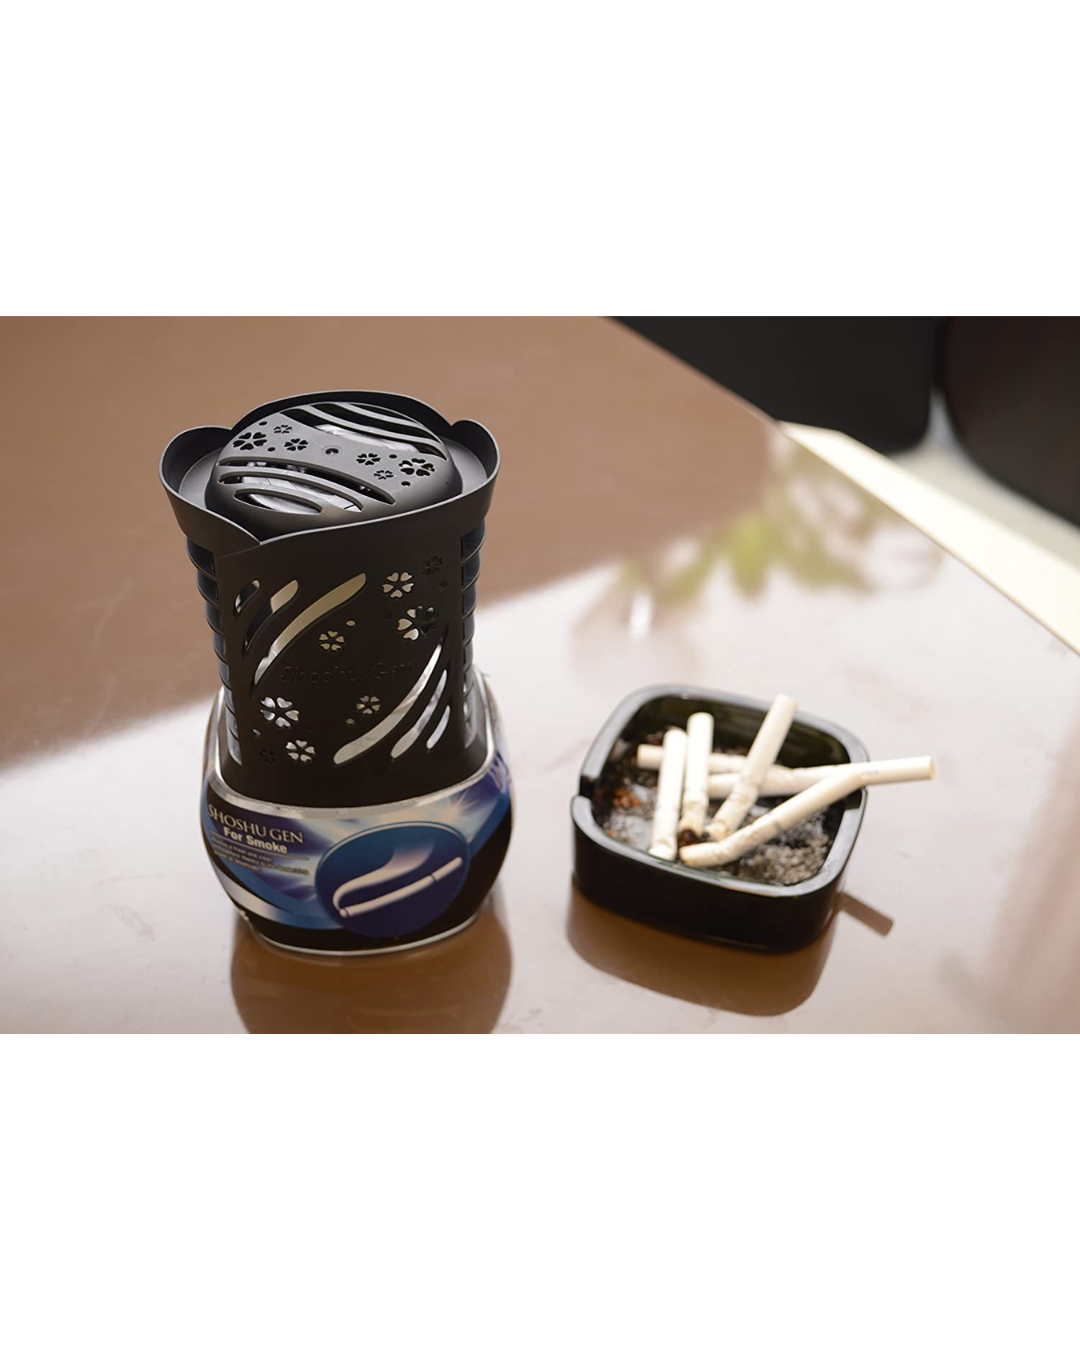 Kobayashi Tobacco Deodorizer | Strong